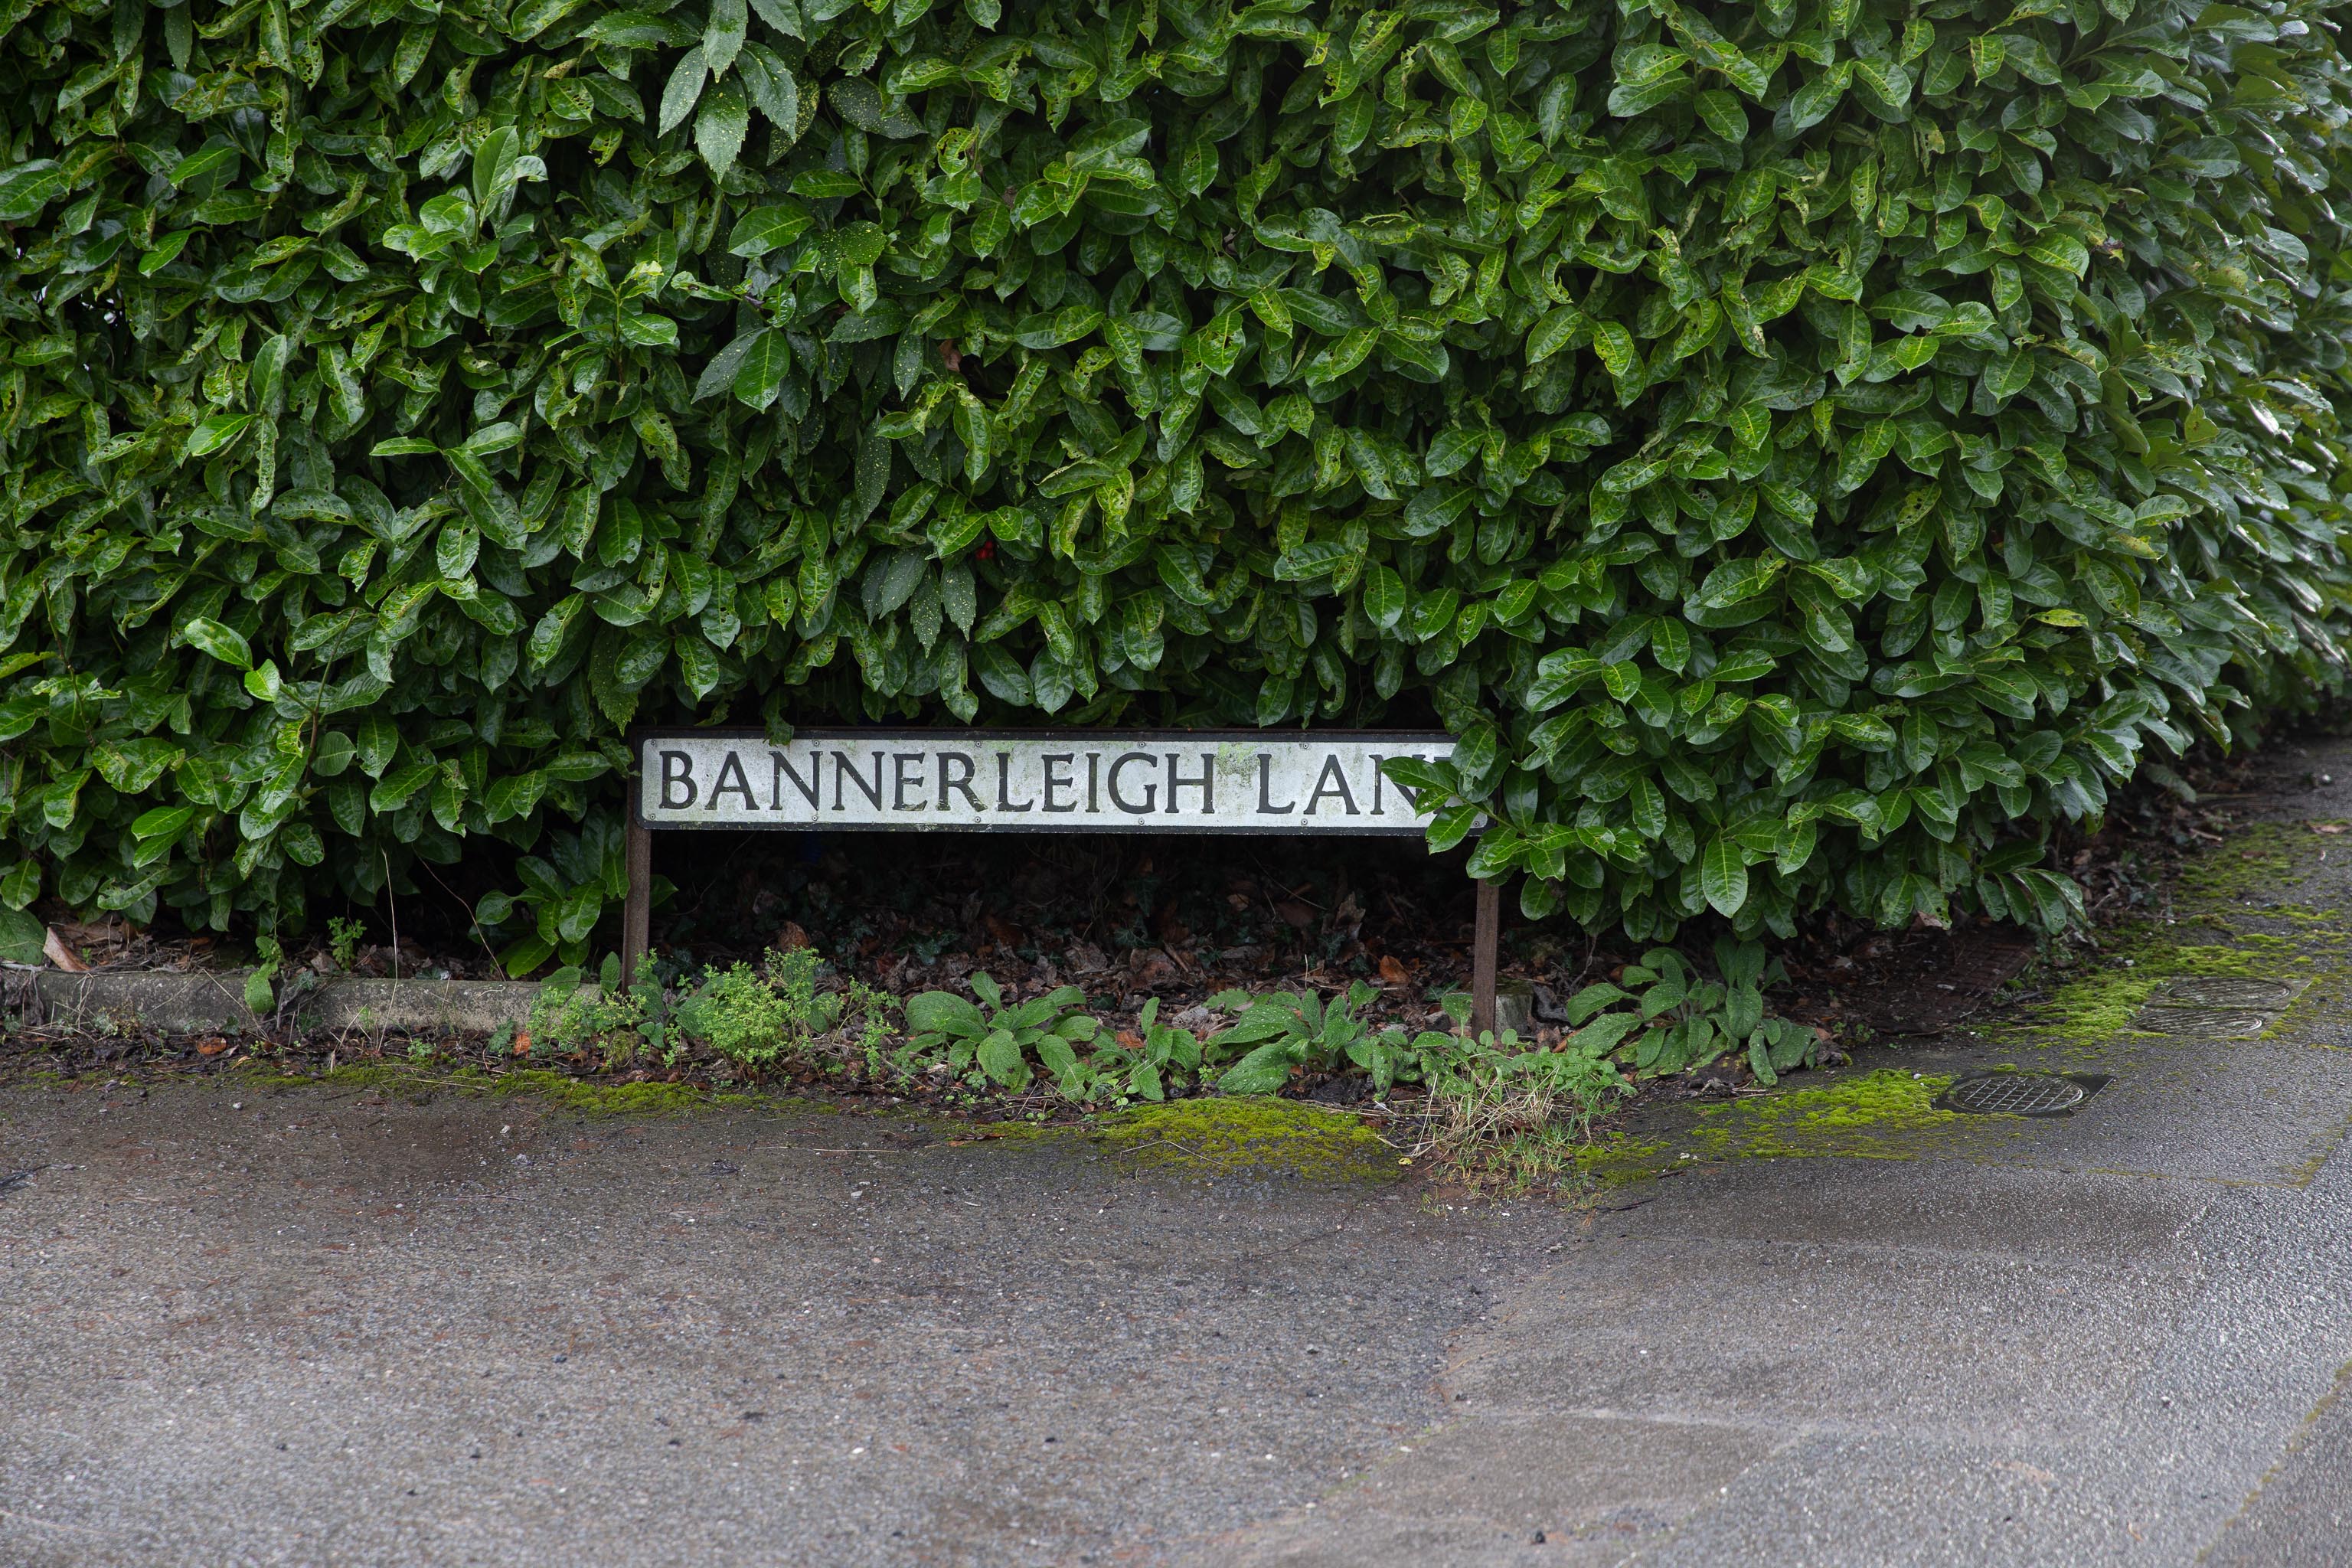 Bannerleigh Lane Sign
